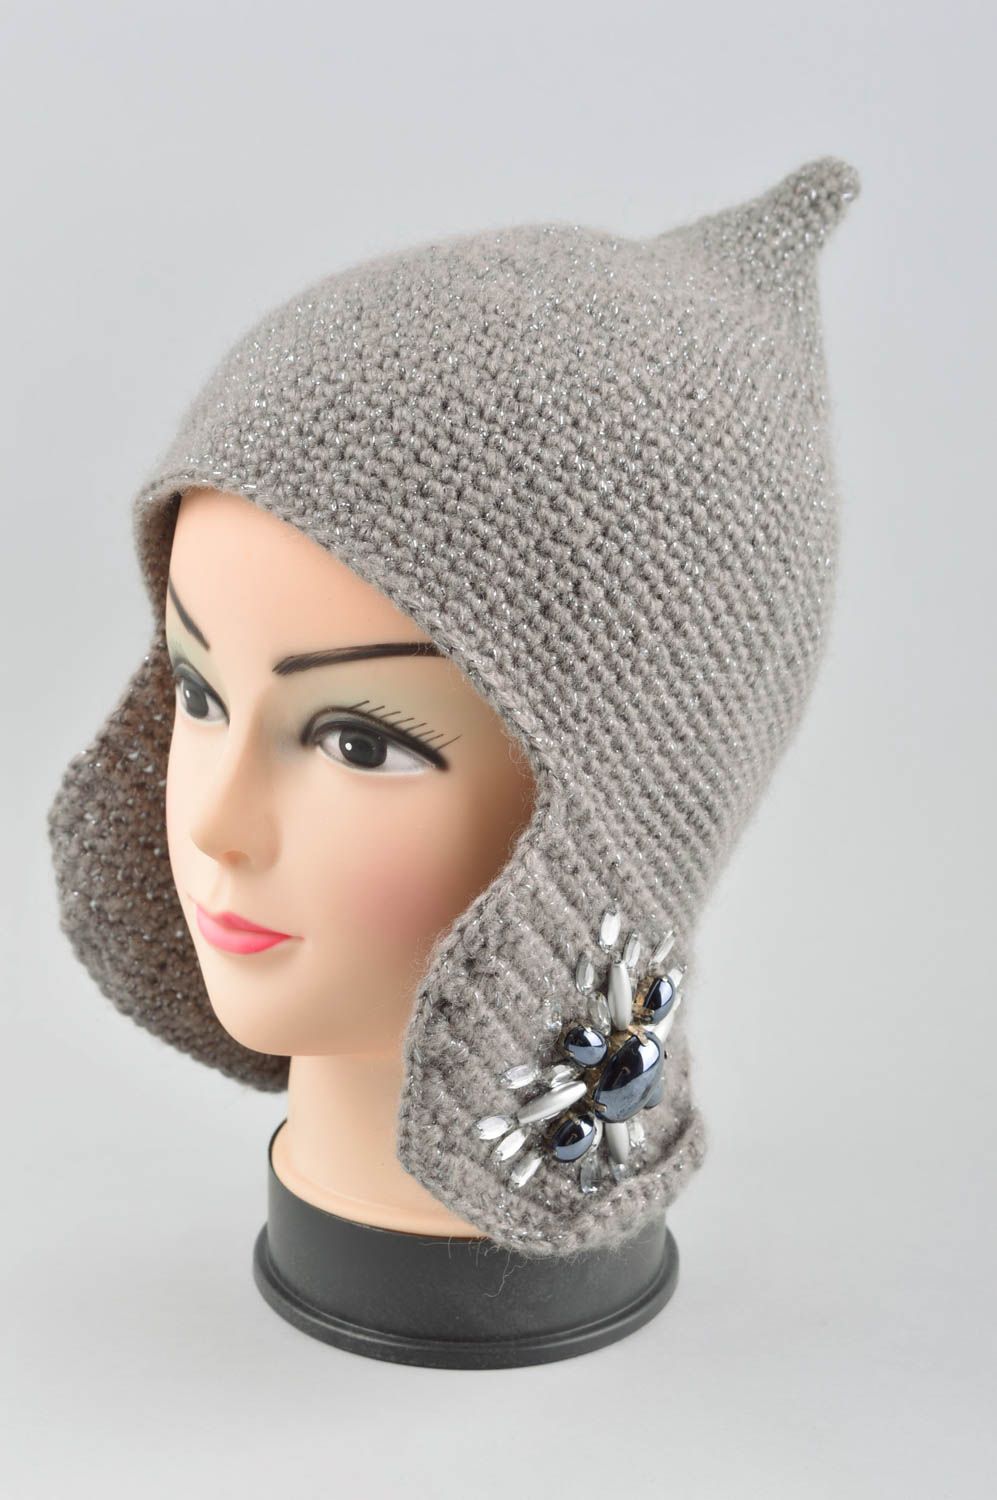 Handmade designer female cap unusual knitted hat stylish winter accessory photo 2